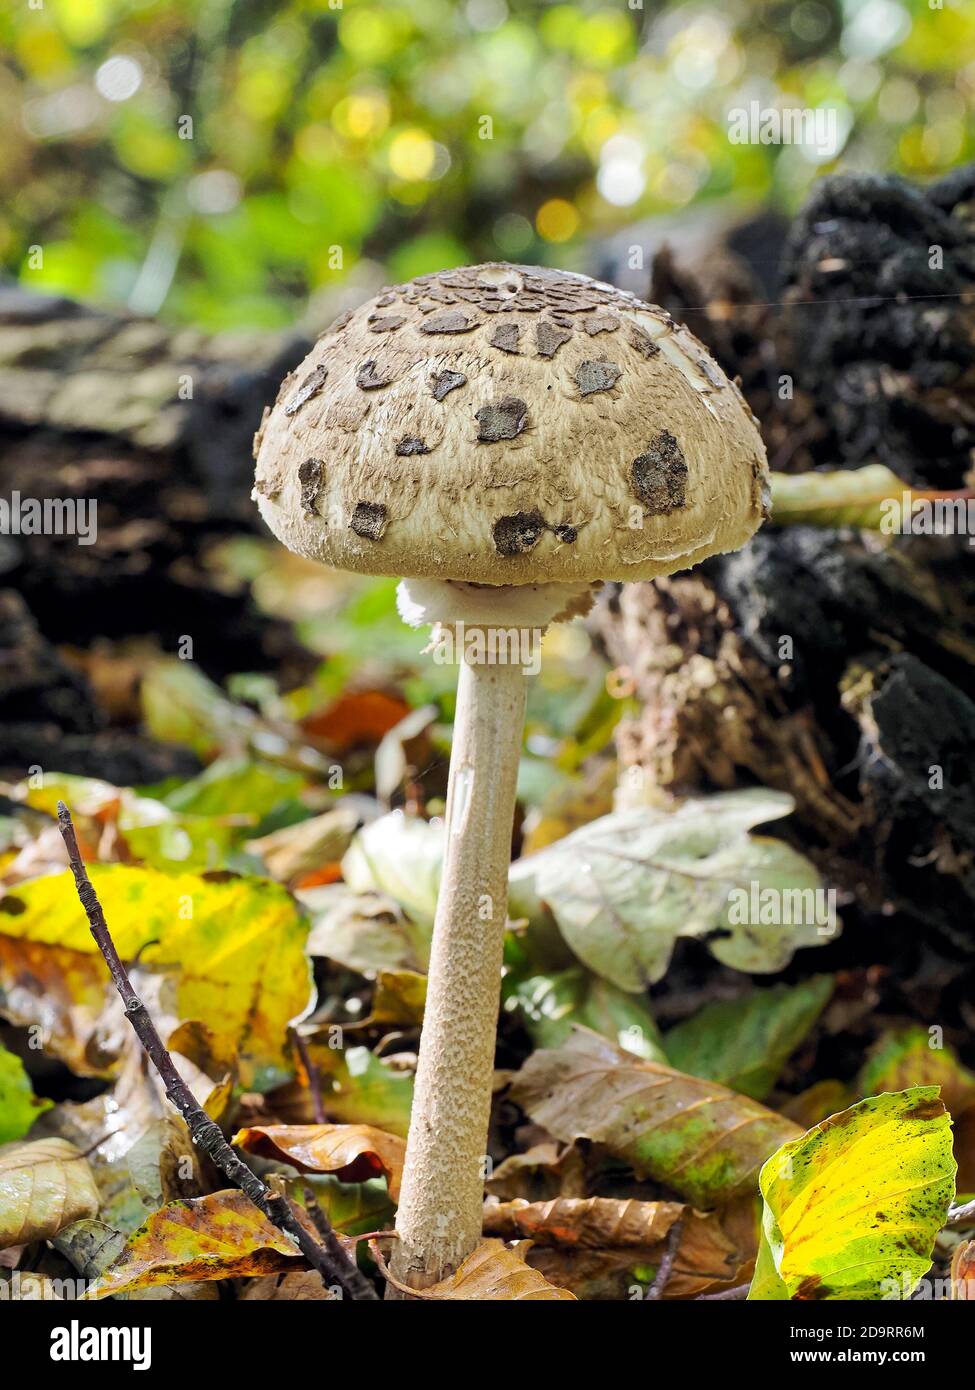 Immature Parasol Mushroom (Nacropeiota procera) growing in a woodland clearing. Stock Photo